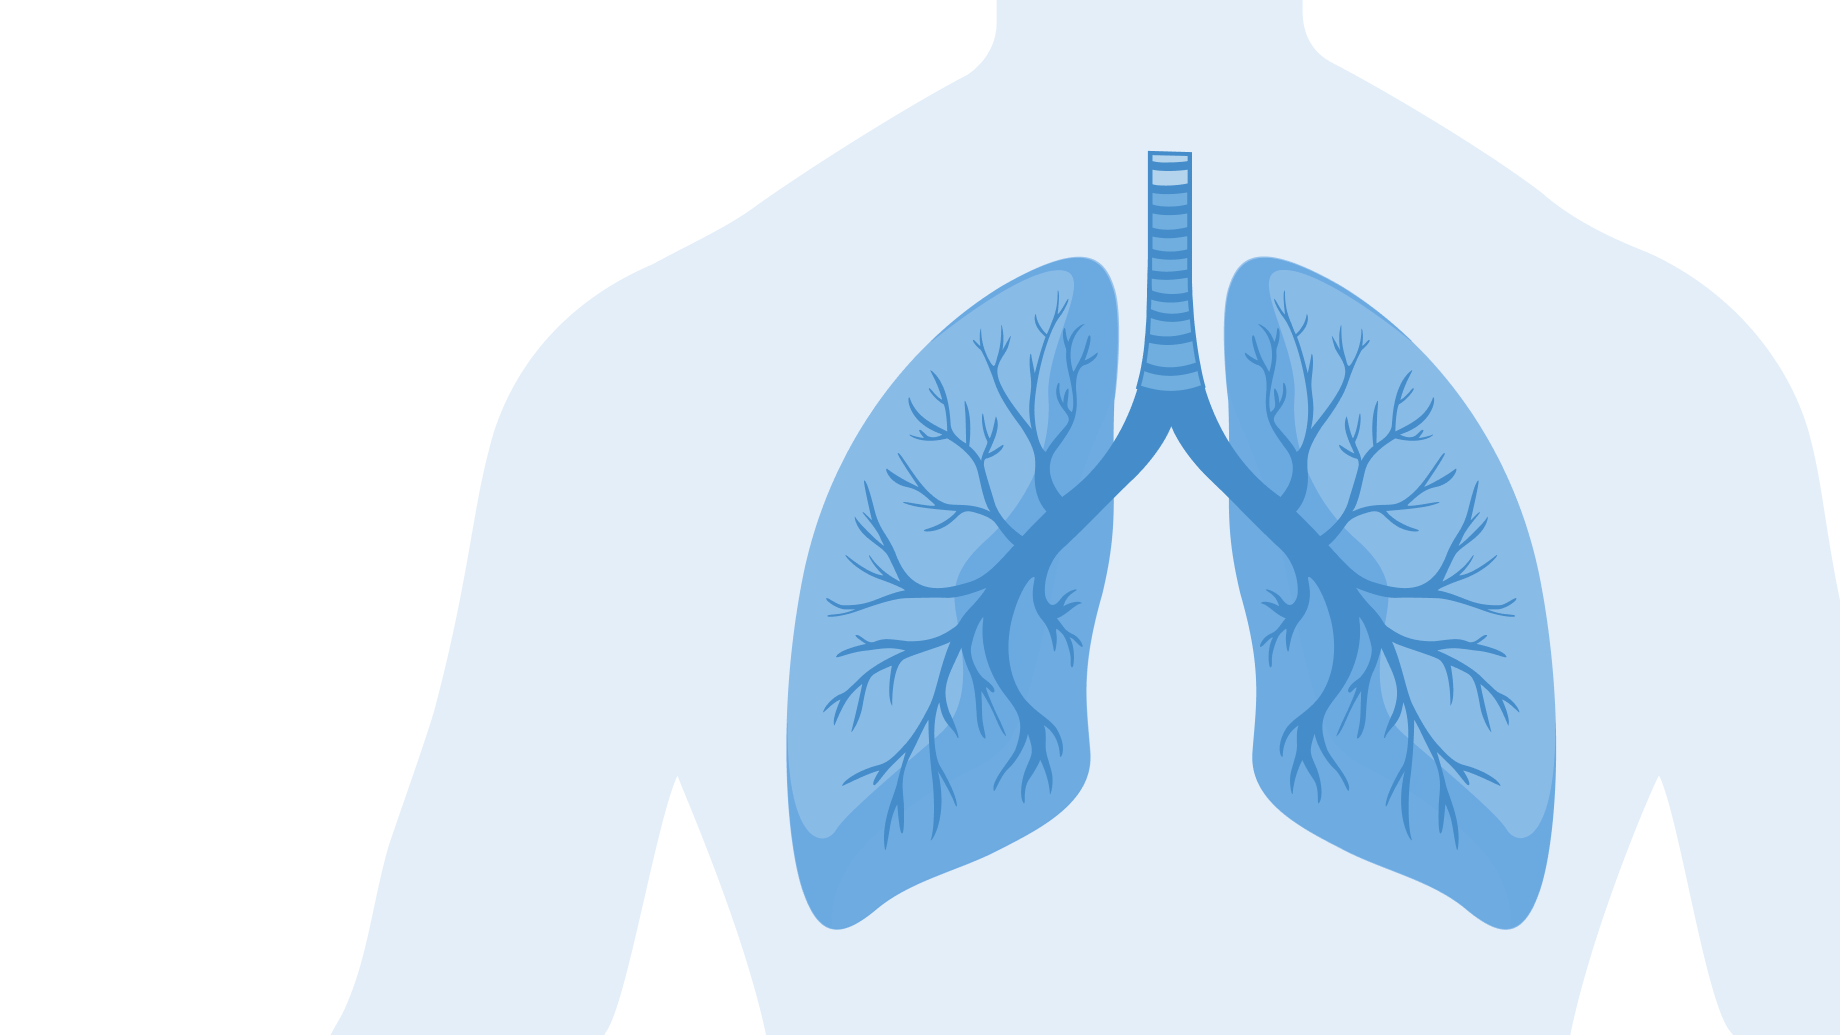 Cancro del polmone